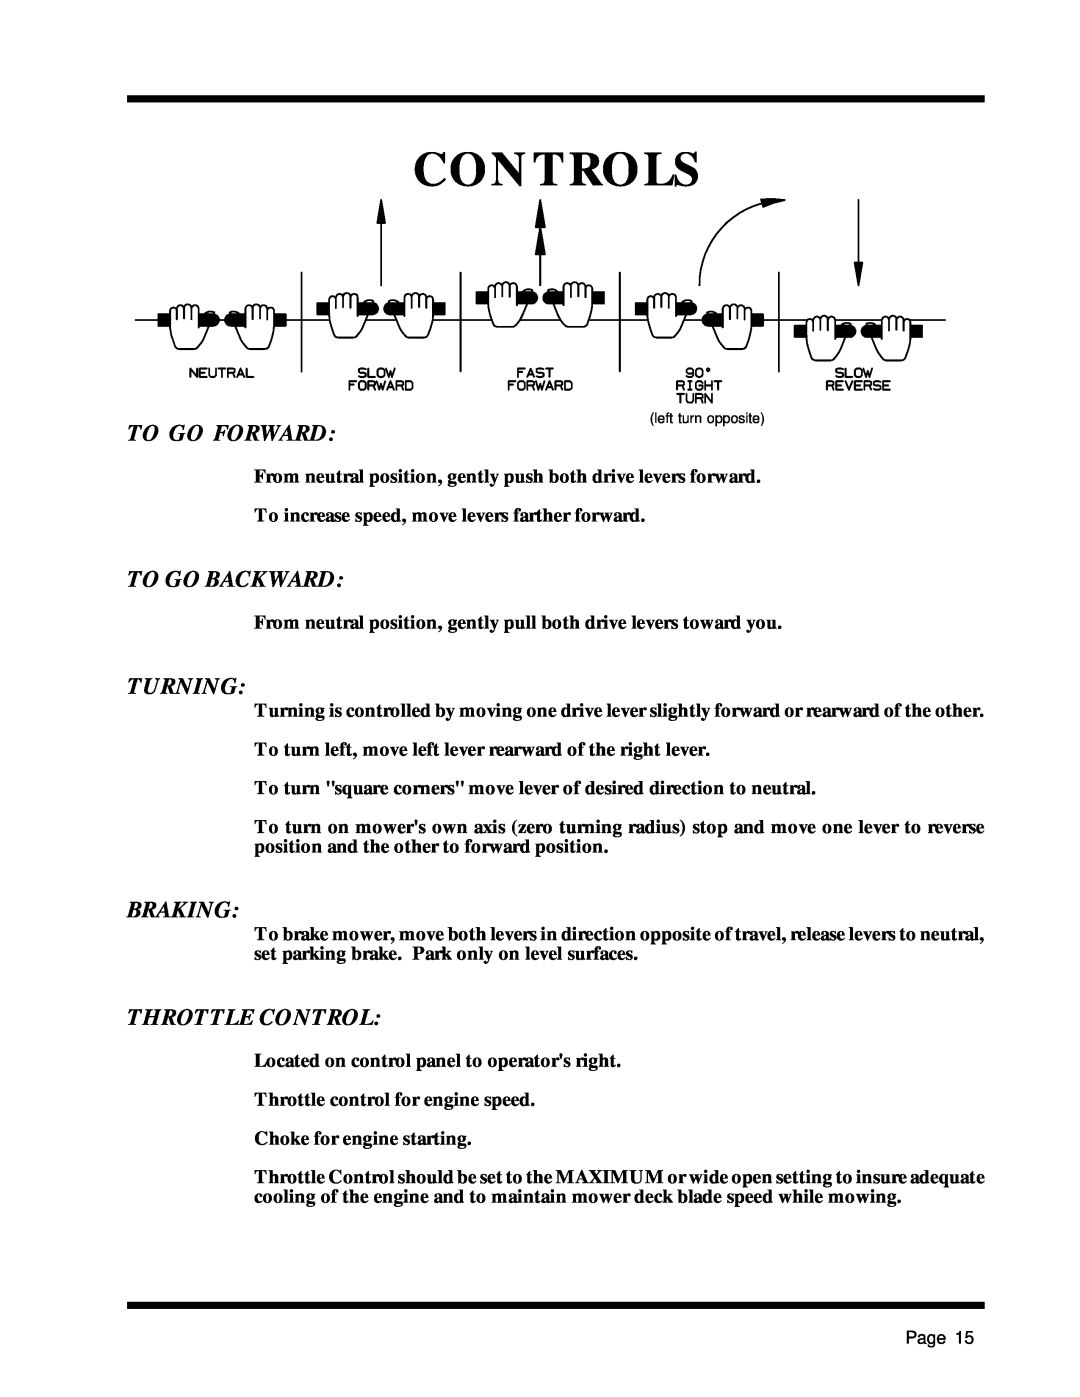 Dixon 1857-0599 manual To Go Forward, To Go Backward, Turning, Braking, Throttle Control, Controls 